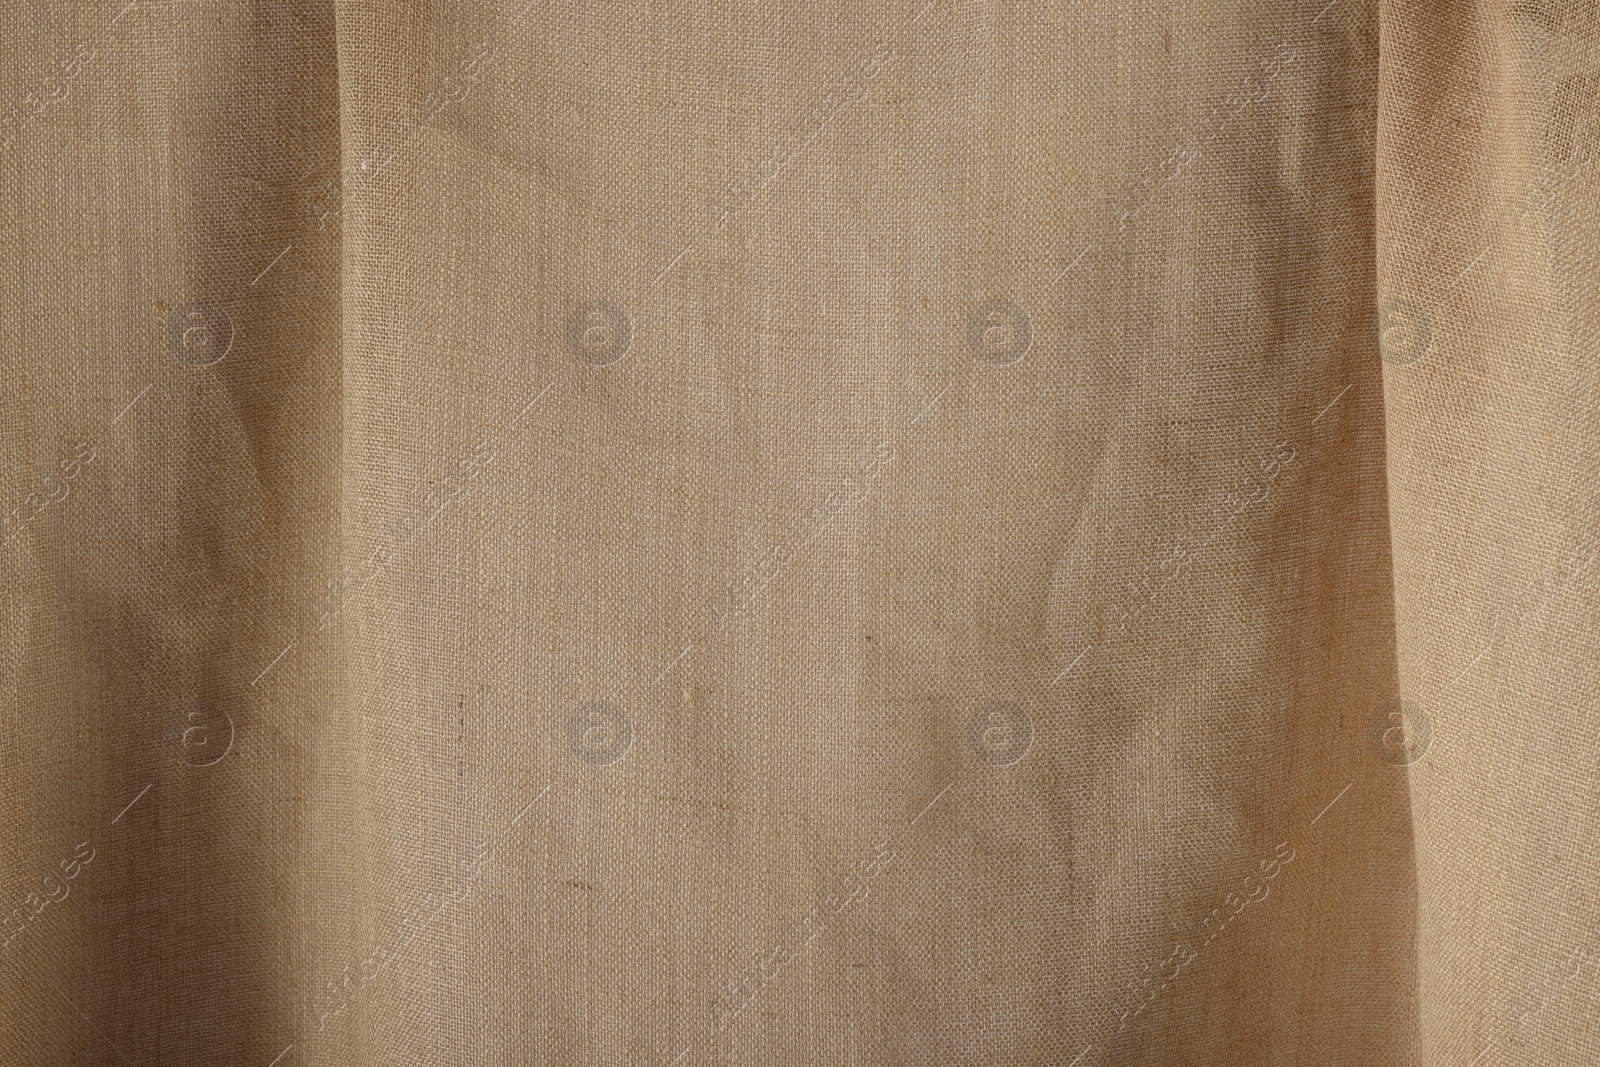 Photo of Texture of natural burlap fabric as background, closeup